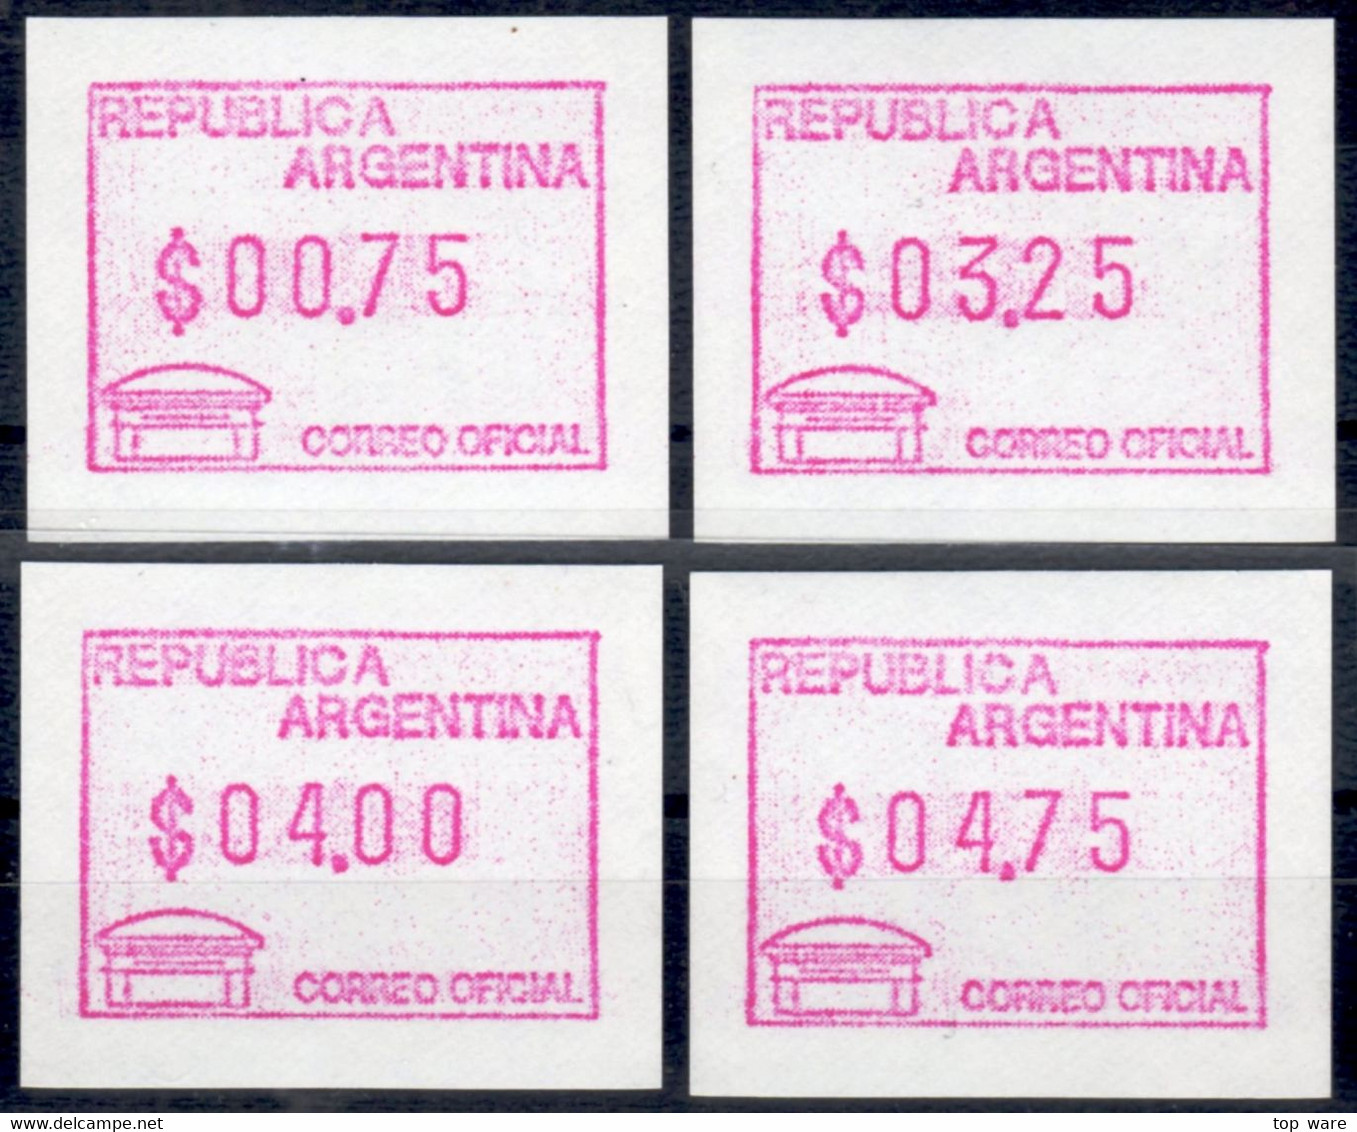 1999 Argentina Argentinien ATM 3 / RARE Postal Rate Set From 12.6.2002 MNH / FRAMA Automatenmarken Automatici - Affrancature Meccaniche/Frama